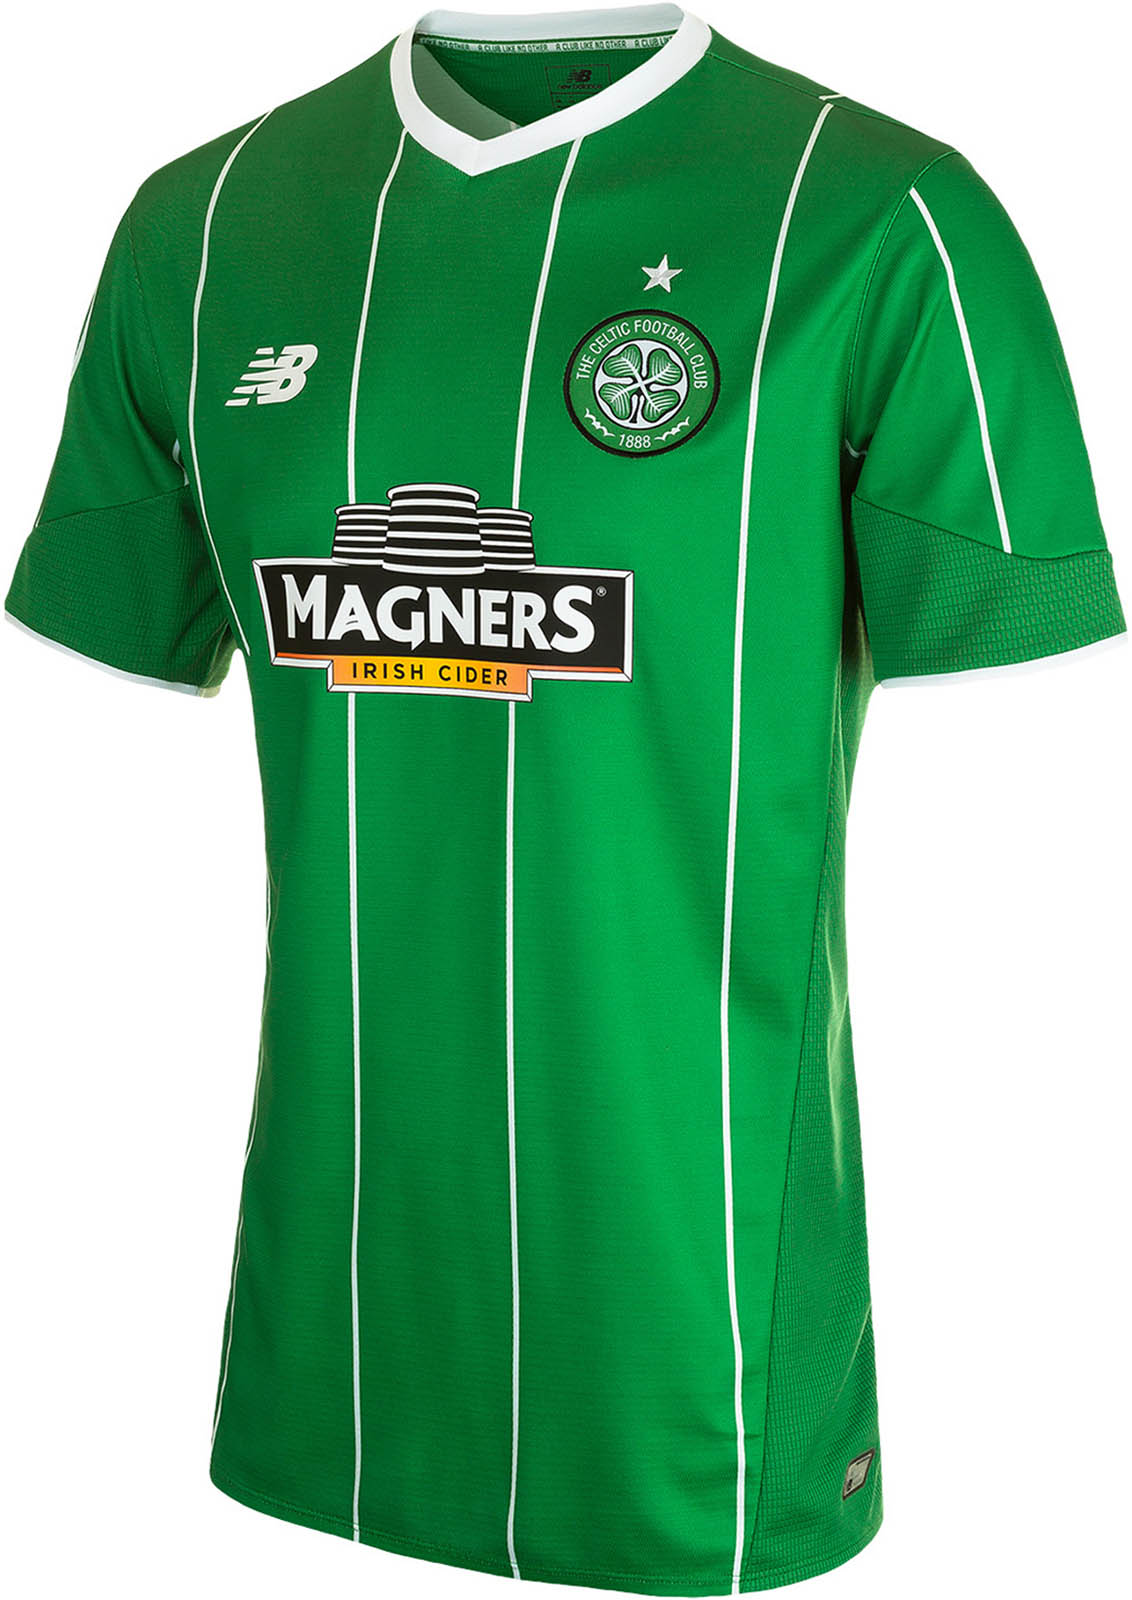 New Balance Celtic 2015-16 Away Kit Released - Footy Headlines